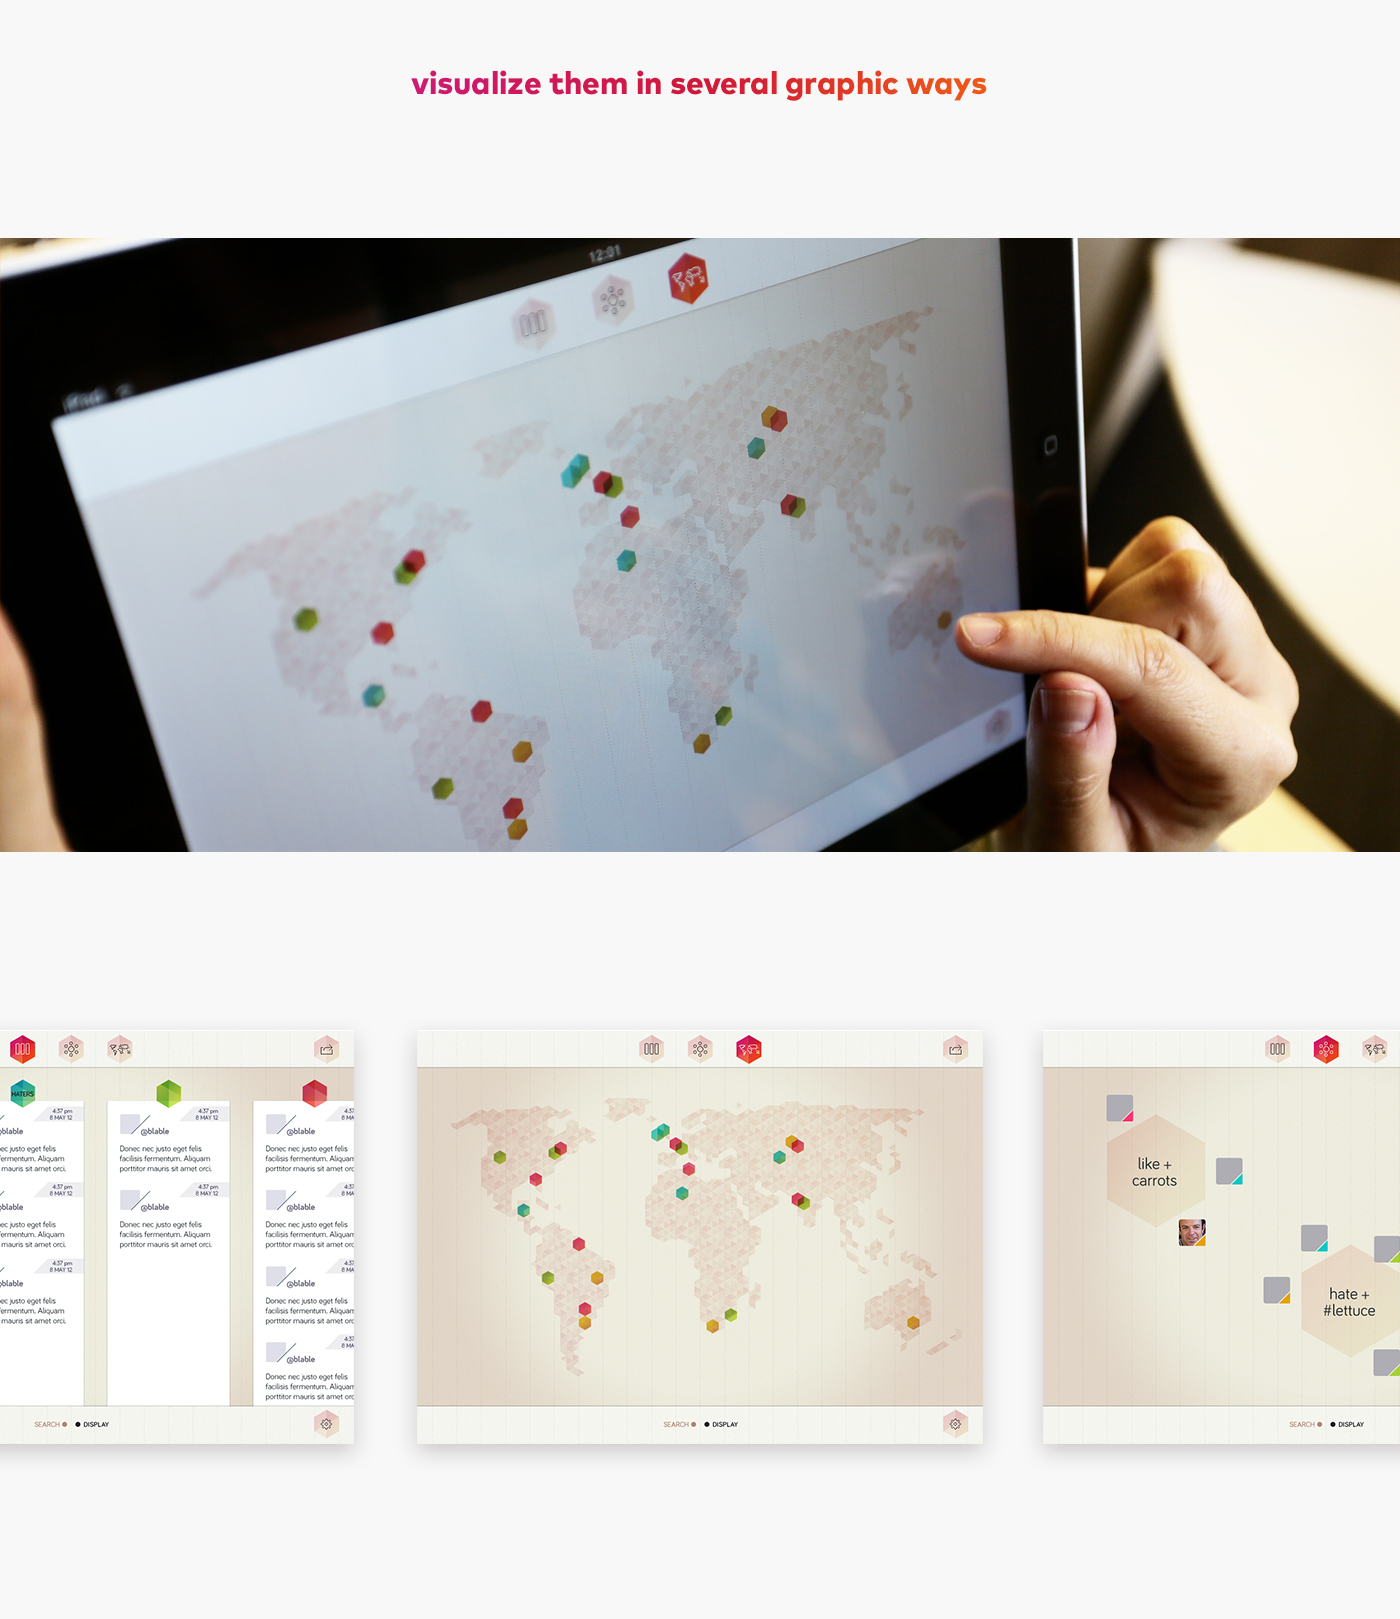 app iPad interaction graph infographic twitter concept fucsia orange hexagon grid gesture